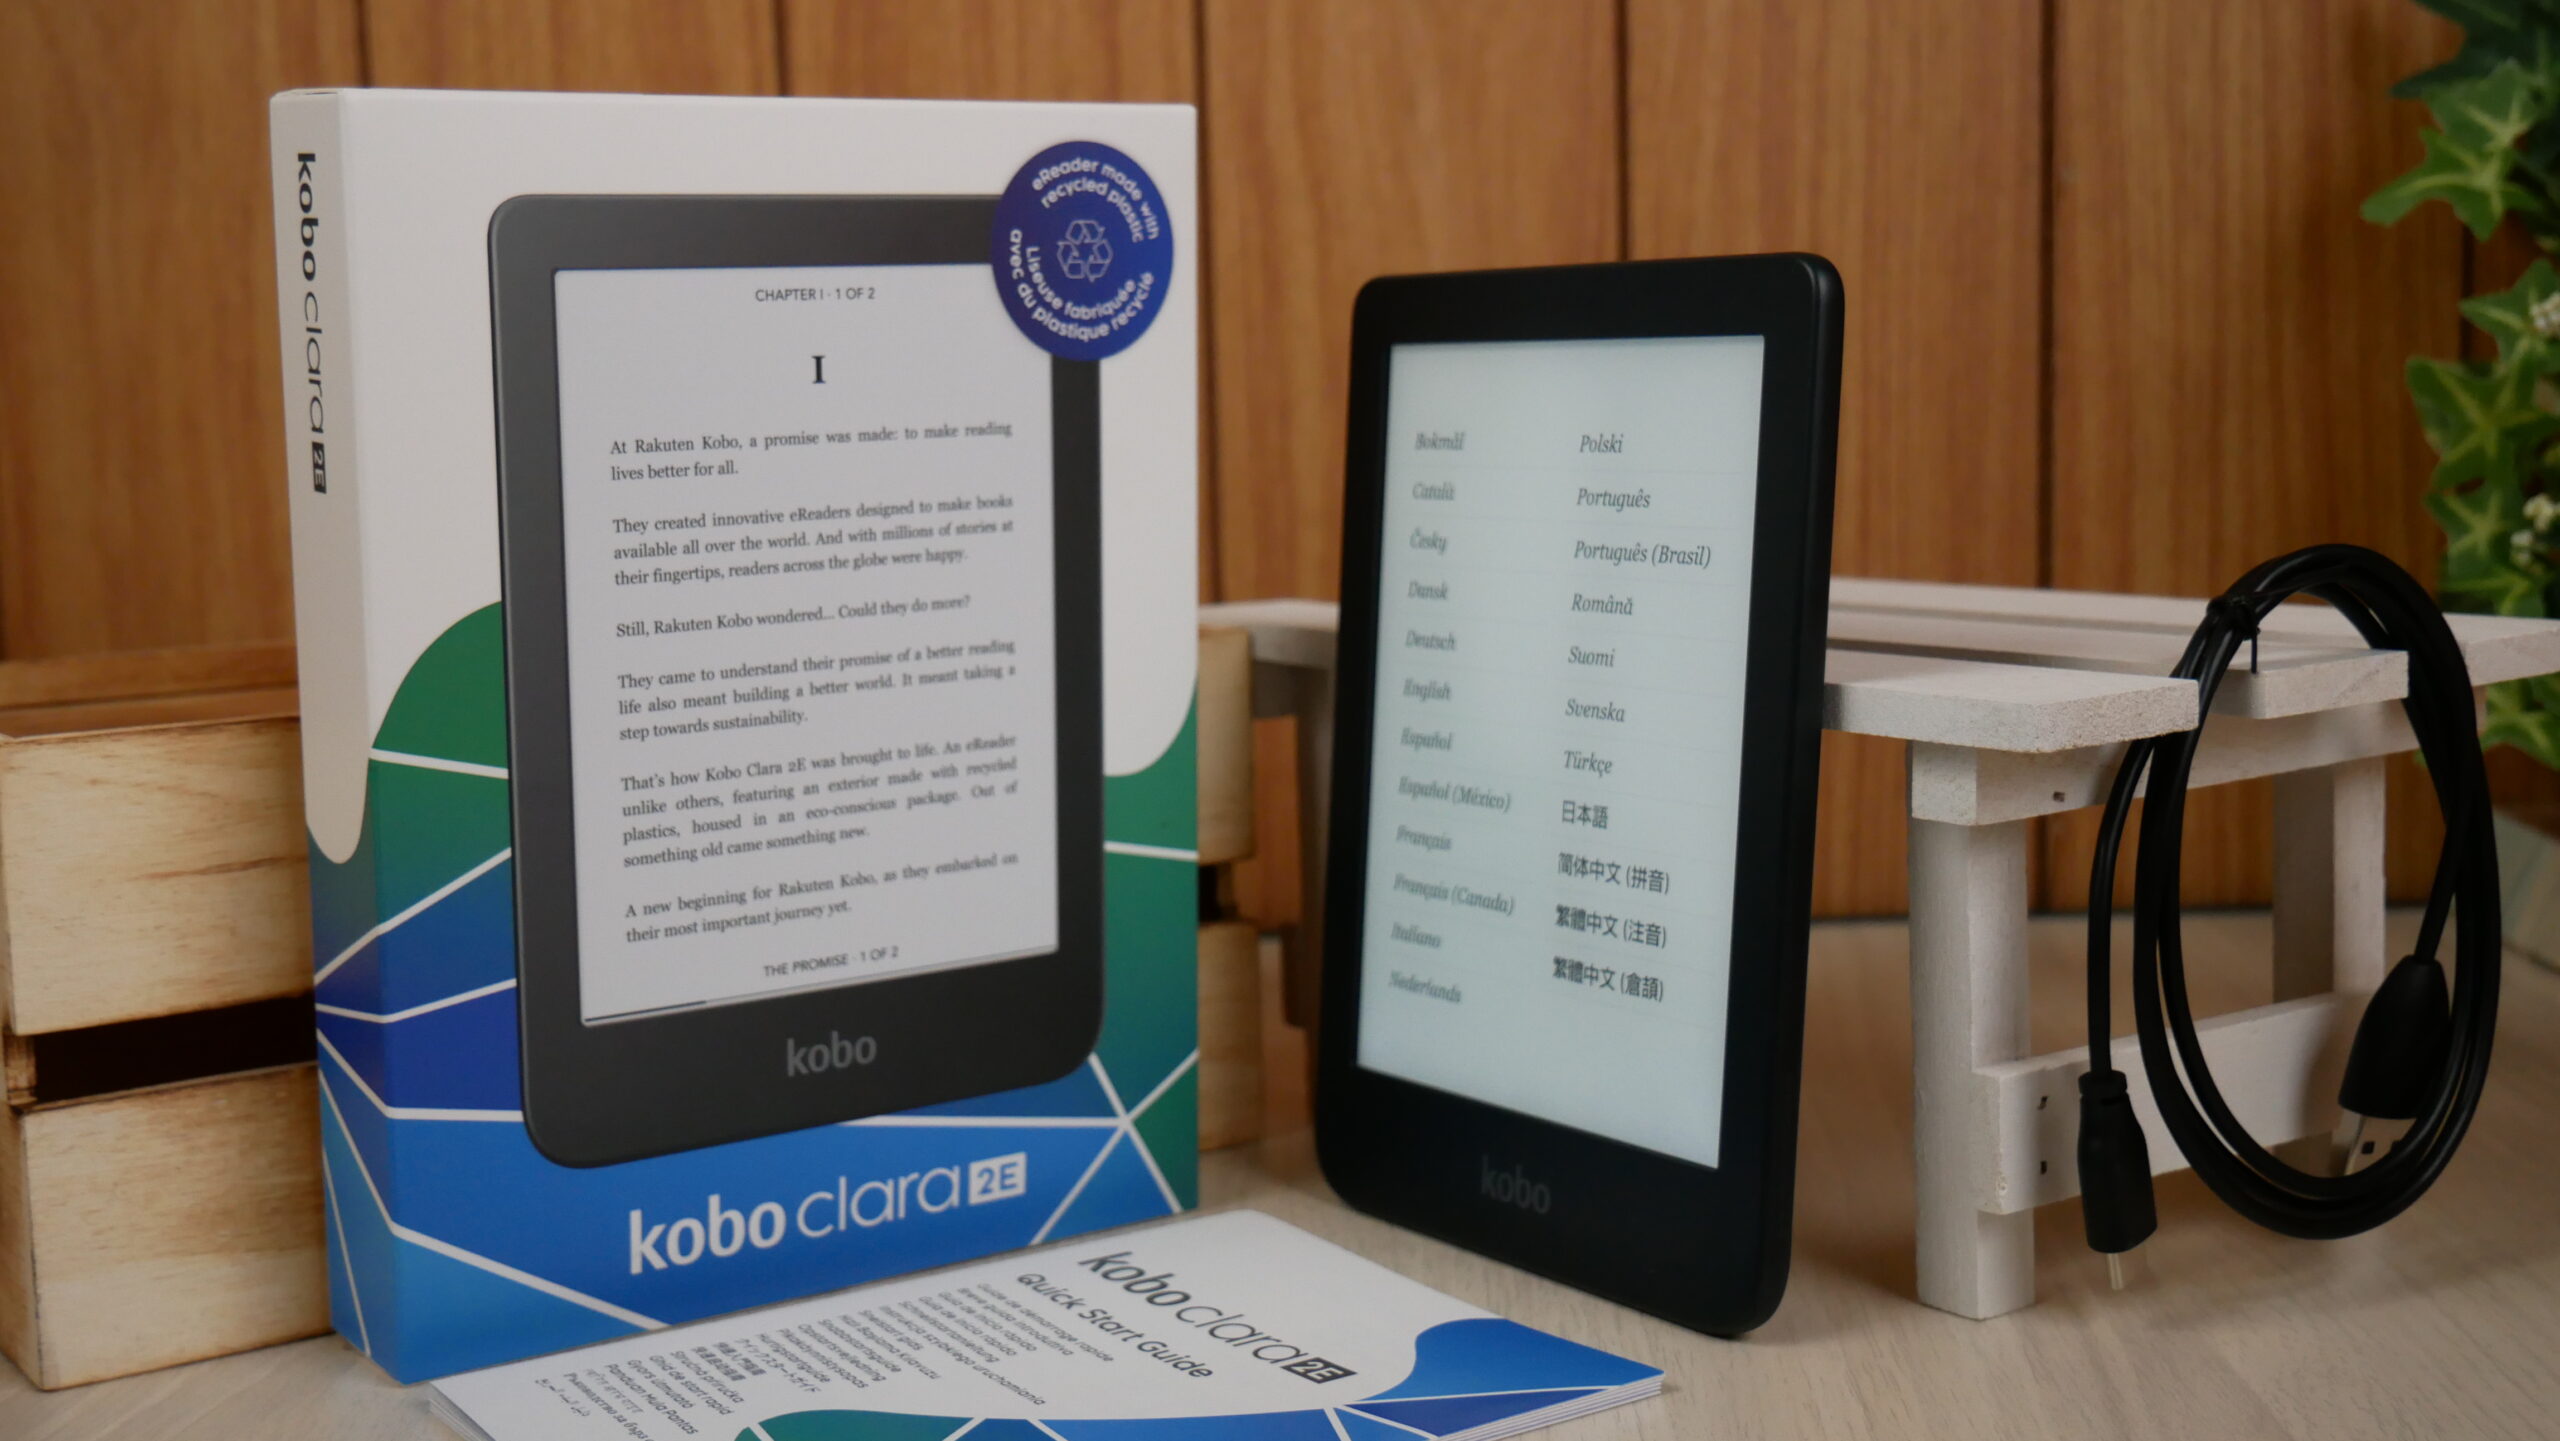 Kobo Clara 2e World's First Recycled e-Reader